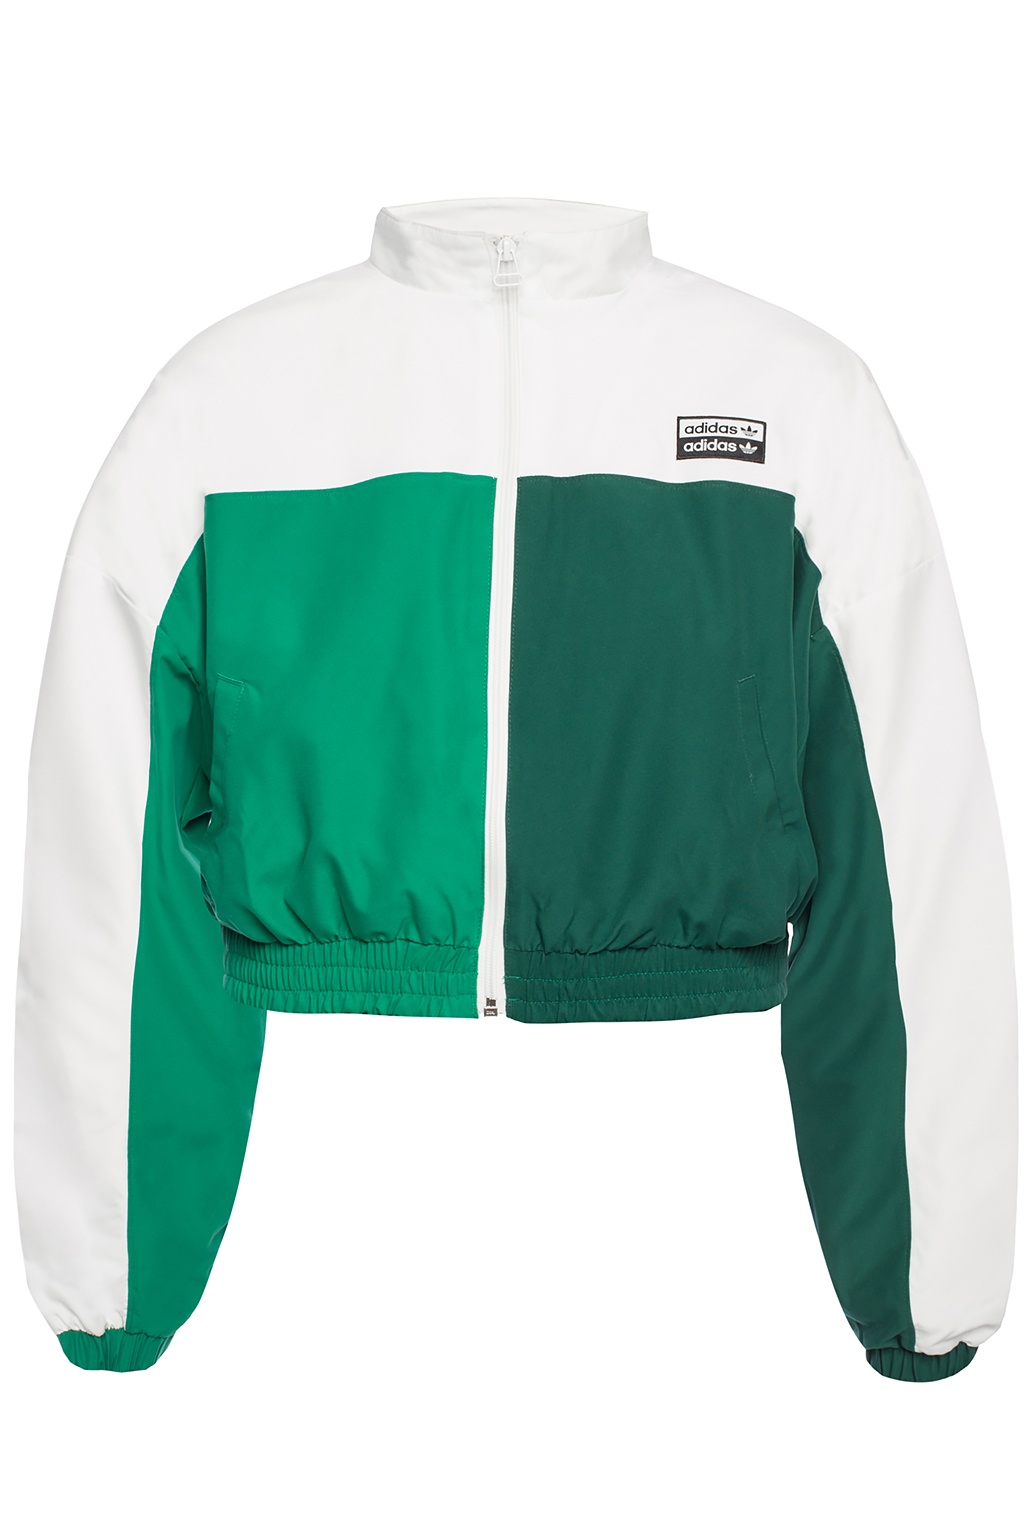 green white adidas jacket